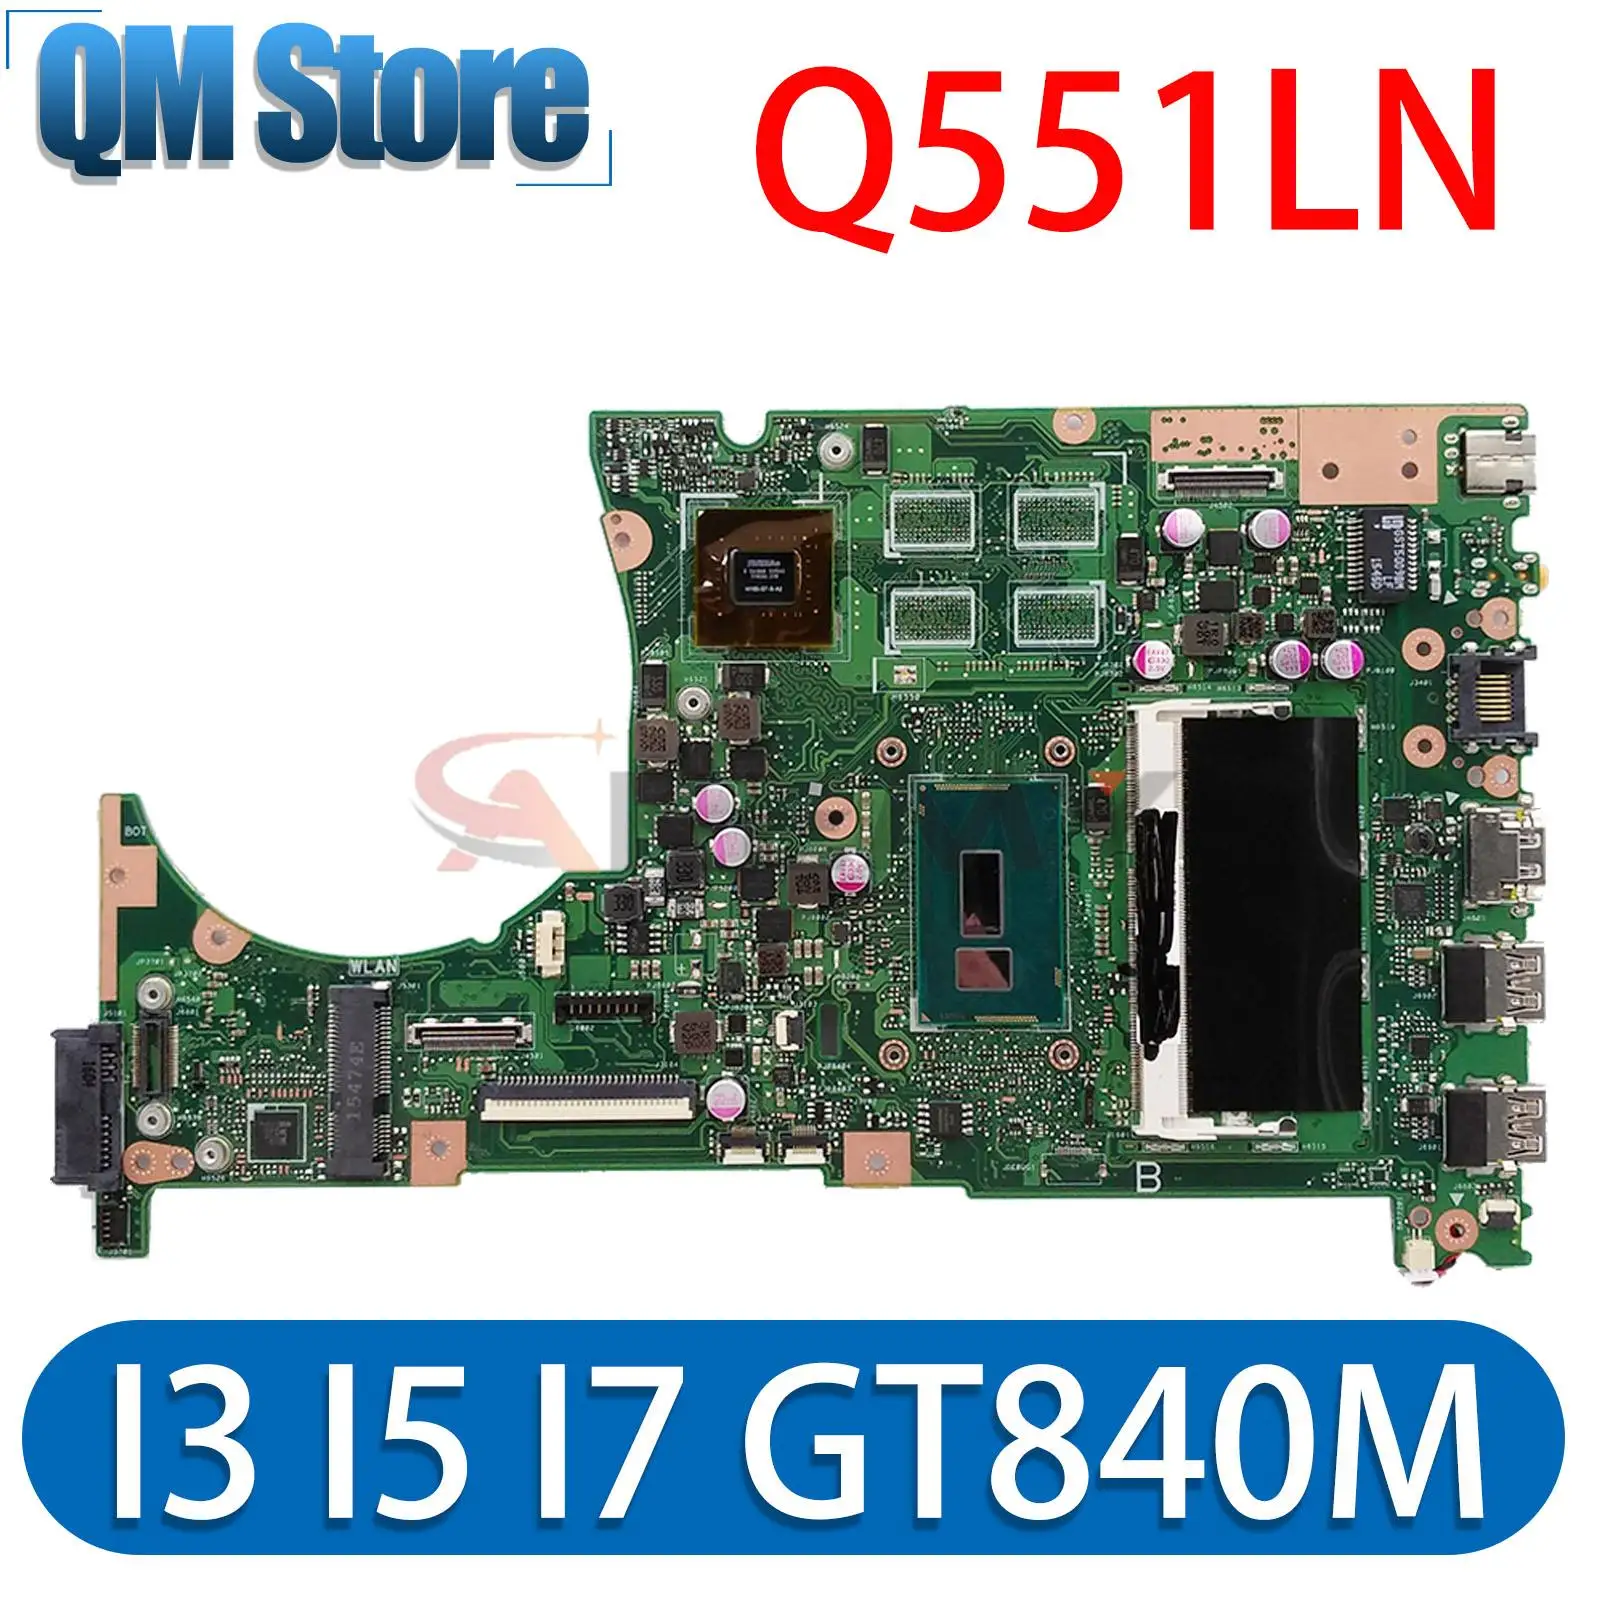 

Q551LN Notebook Mainboard For ASUS Q551LB Q551L Q551 Laptop Motherboard i3 i5 i7 4GB/RAM GT840M MAIN BOARD TEST OK